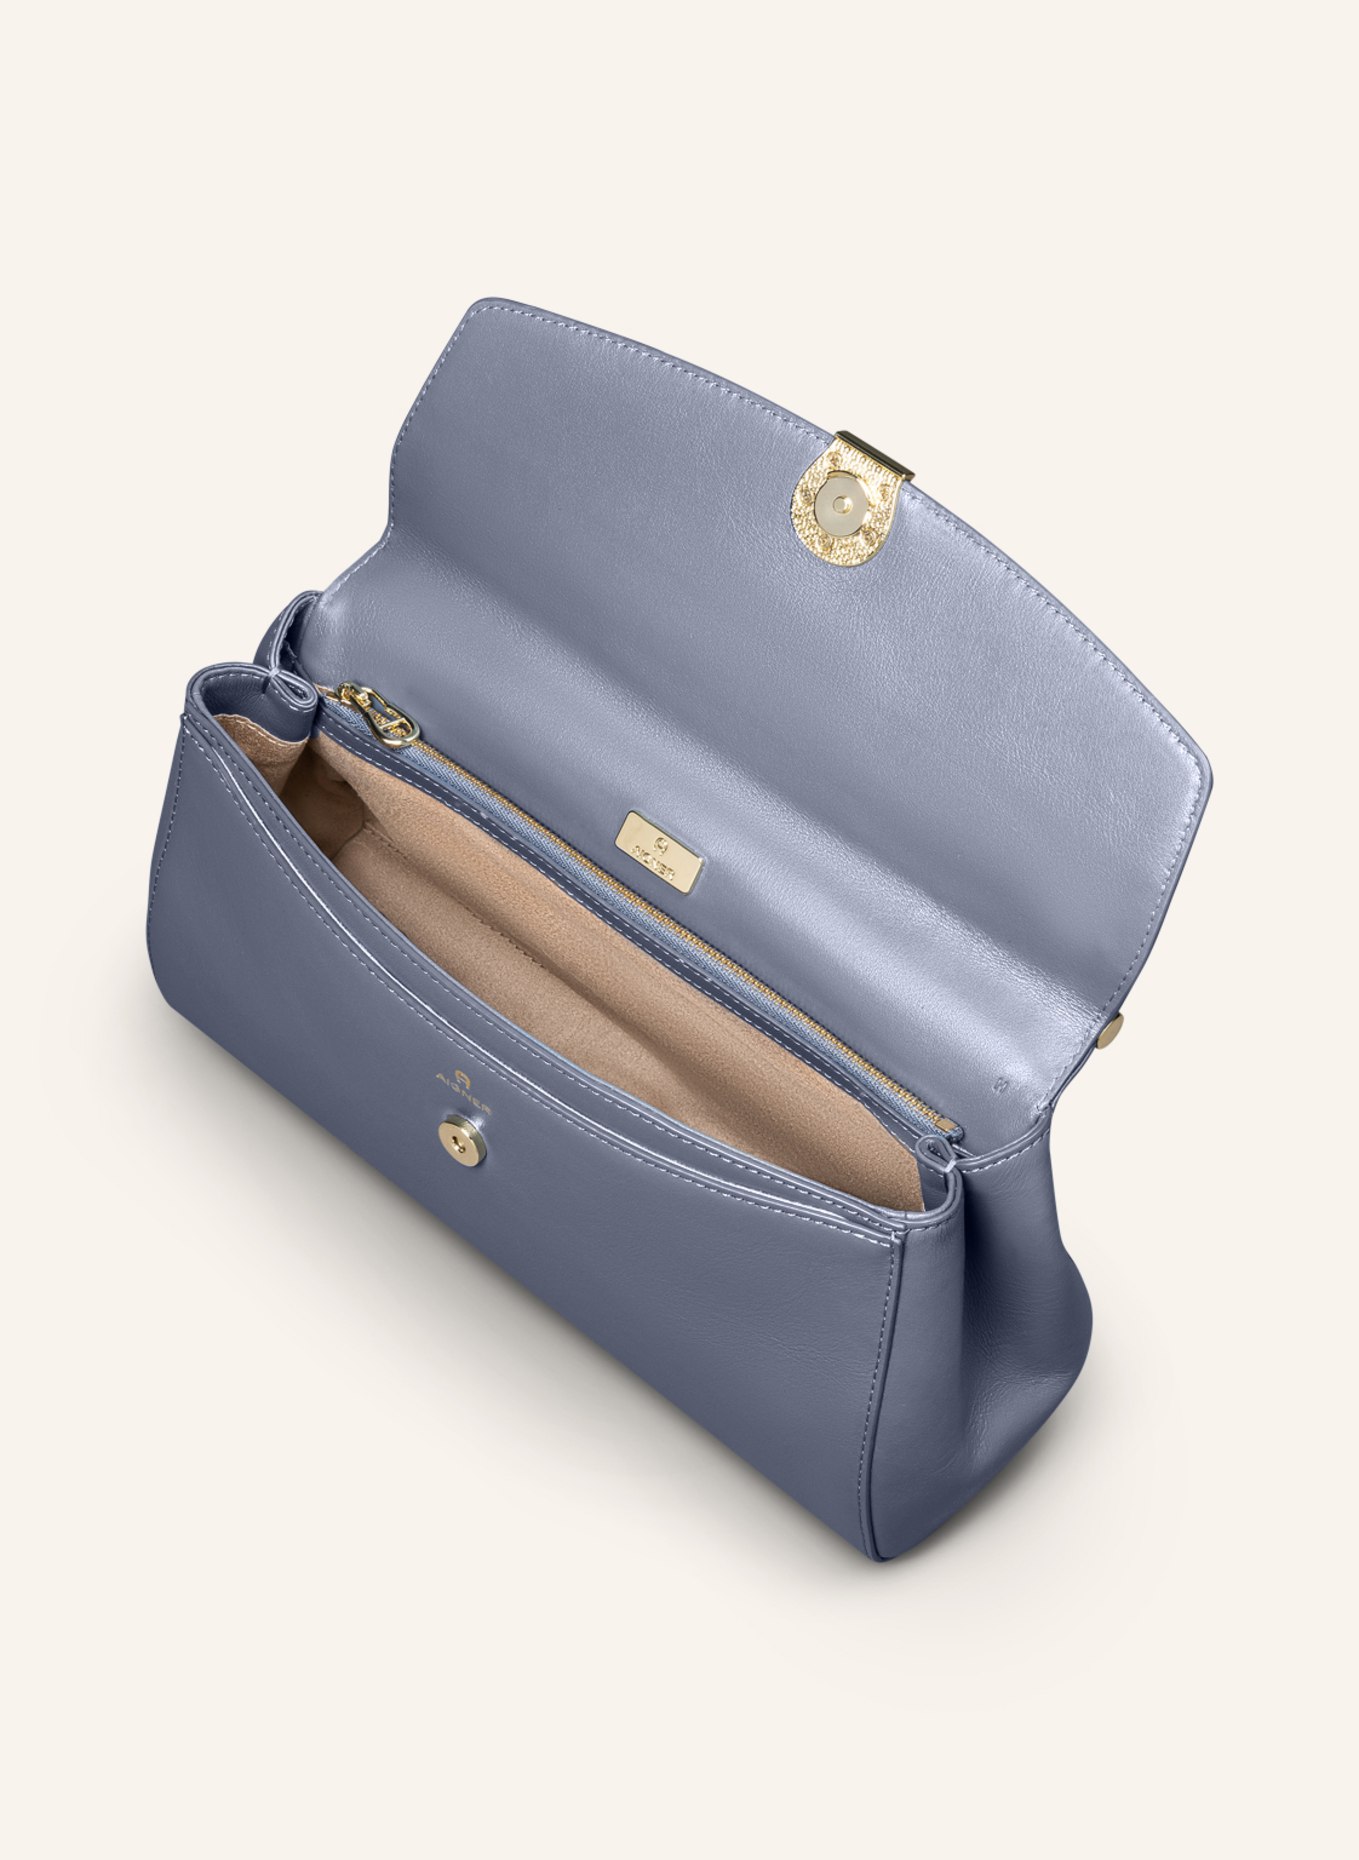 AIGNER Handtasche CELESTE, Farbe: DUNKELBLAU/ GRAU (Bild 3)